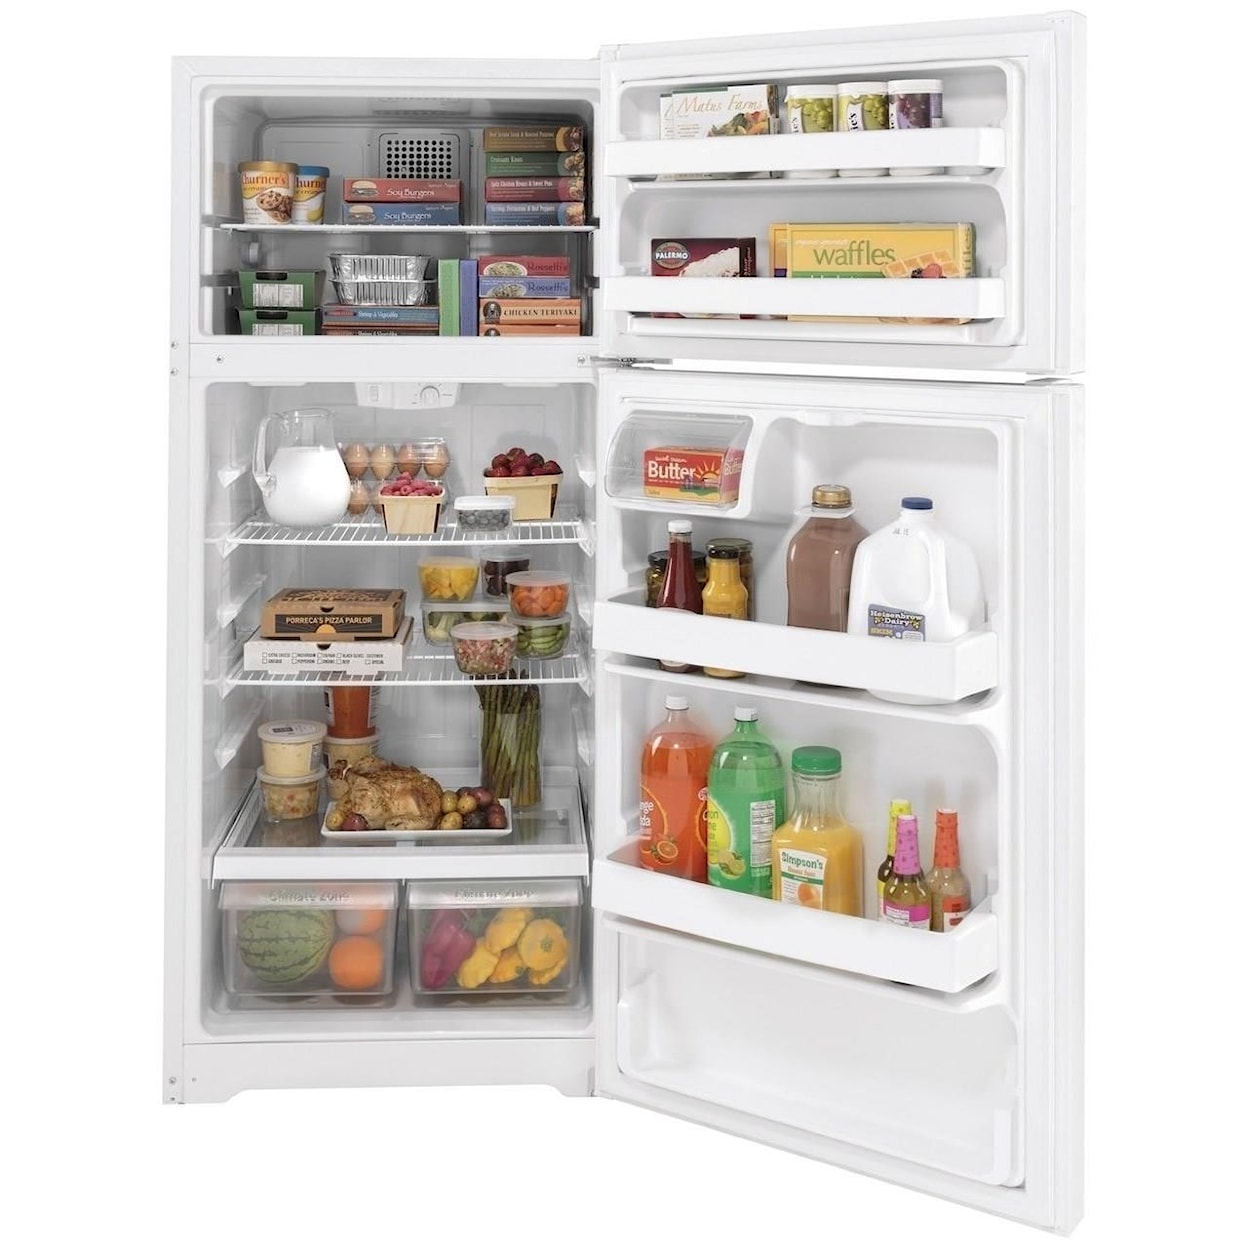 GE Appliances GE Top-Freezer Refrigerators 16.6 Cu. Ft. Black Top Freezer Refrigerator